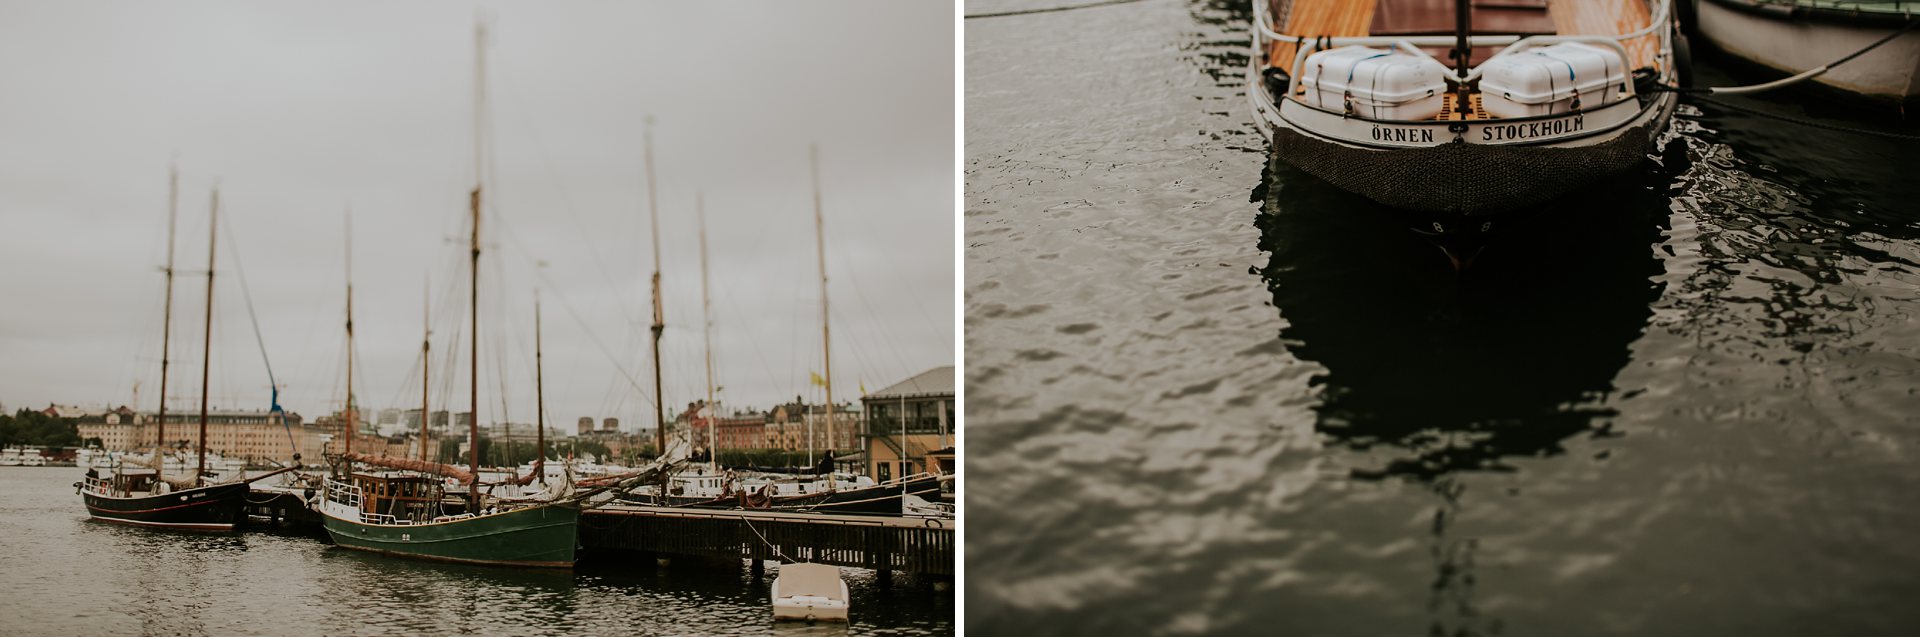 Stockholm sea port boats